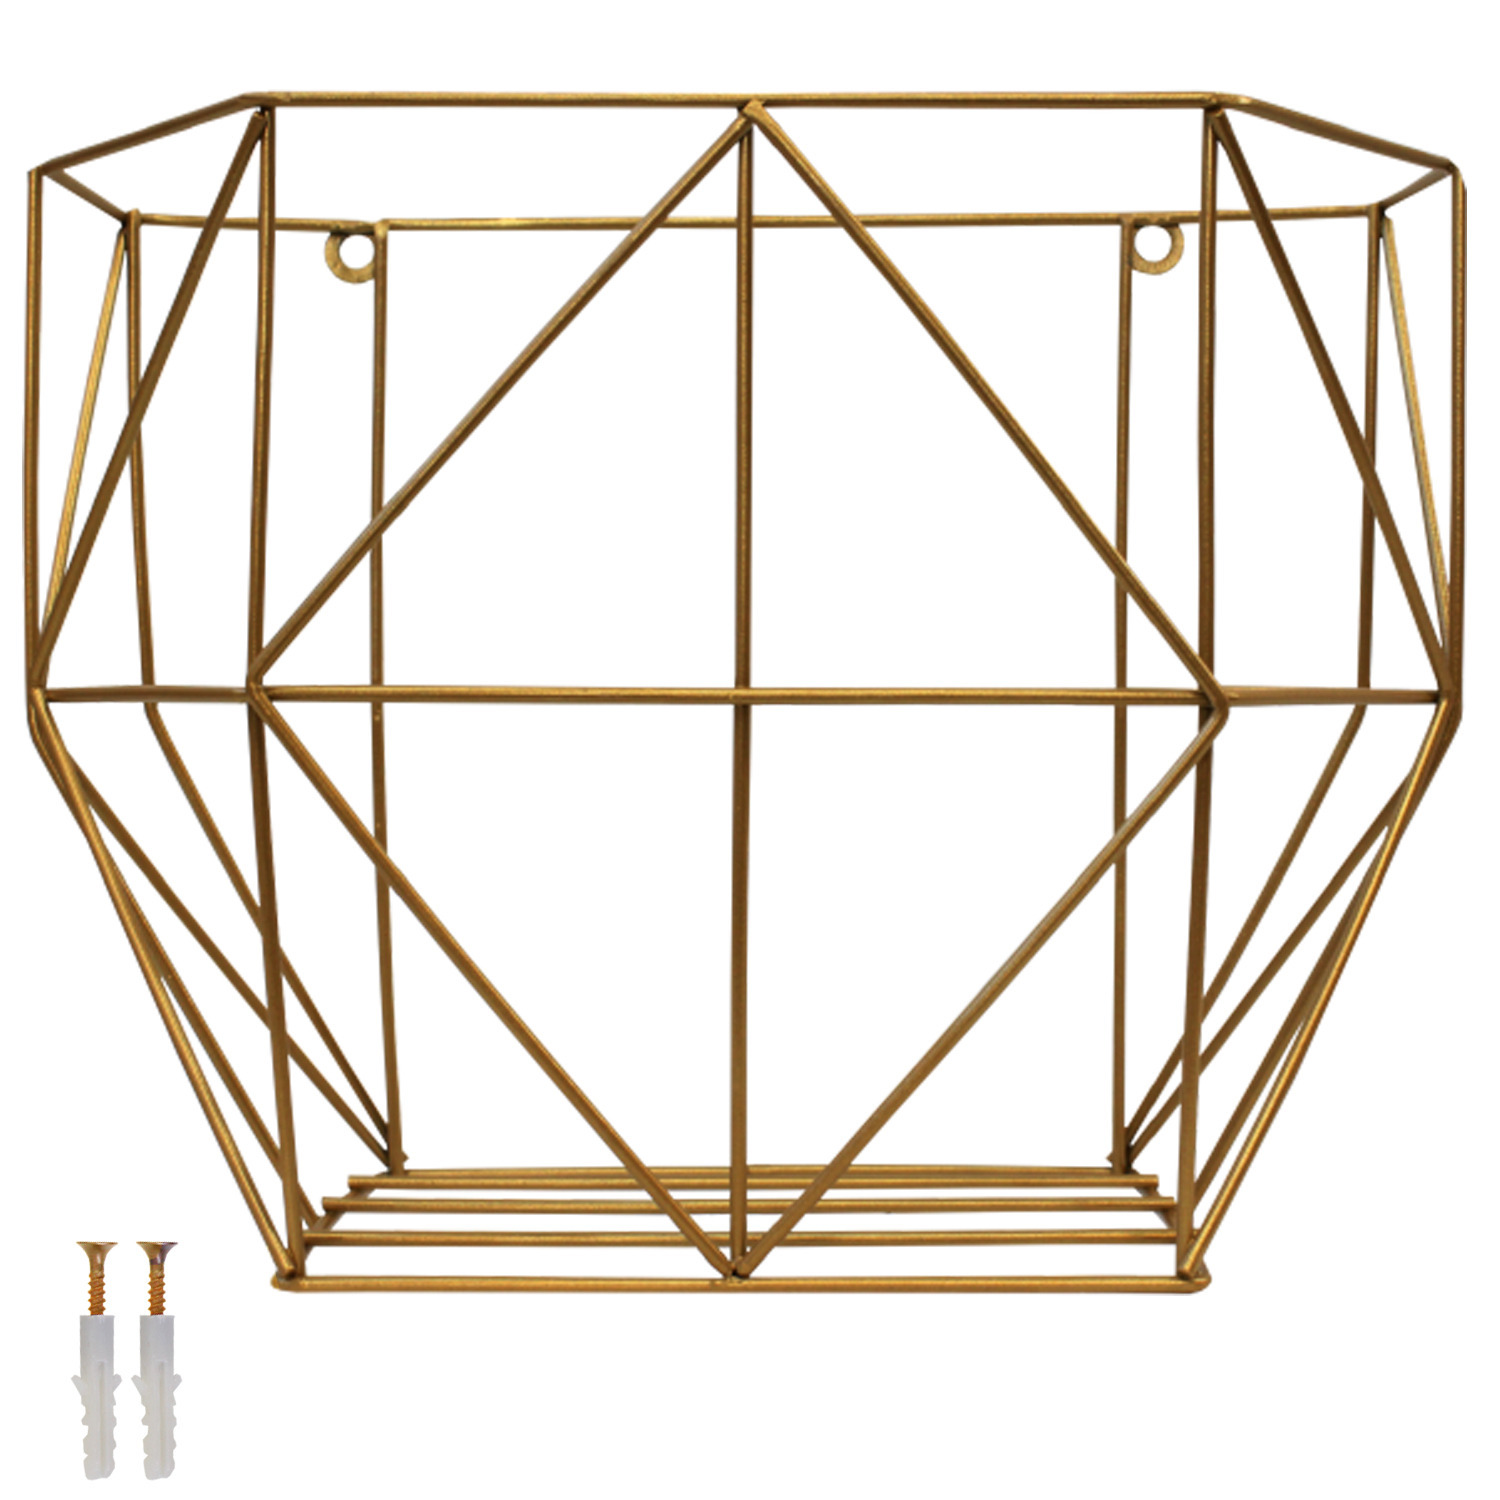 Hanging Fruit Basket Metal Wire Storage Organizer Wall Basket for Kitchen Gold - Medium